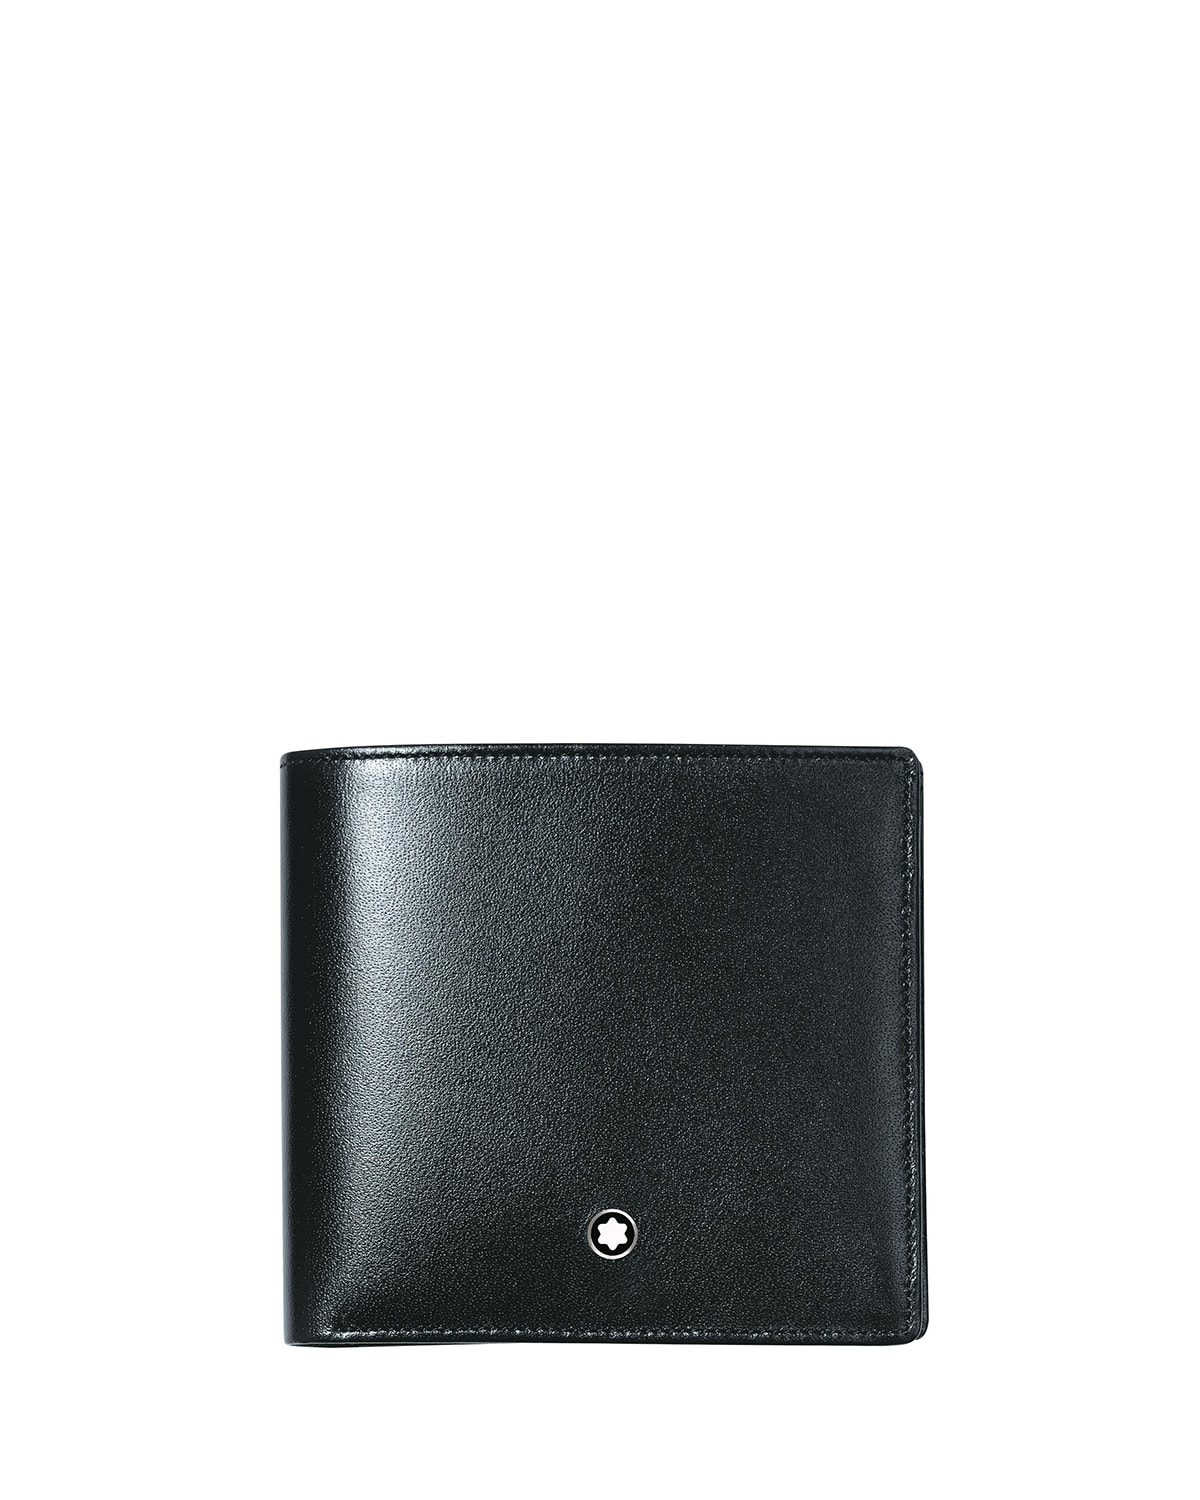 Montblanc Men's Full-grain Cowhide Leather Wallet